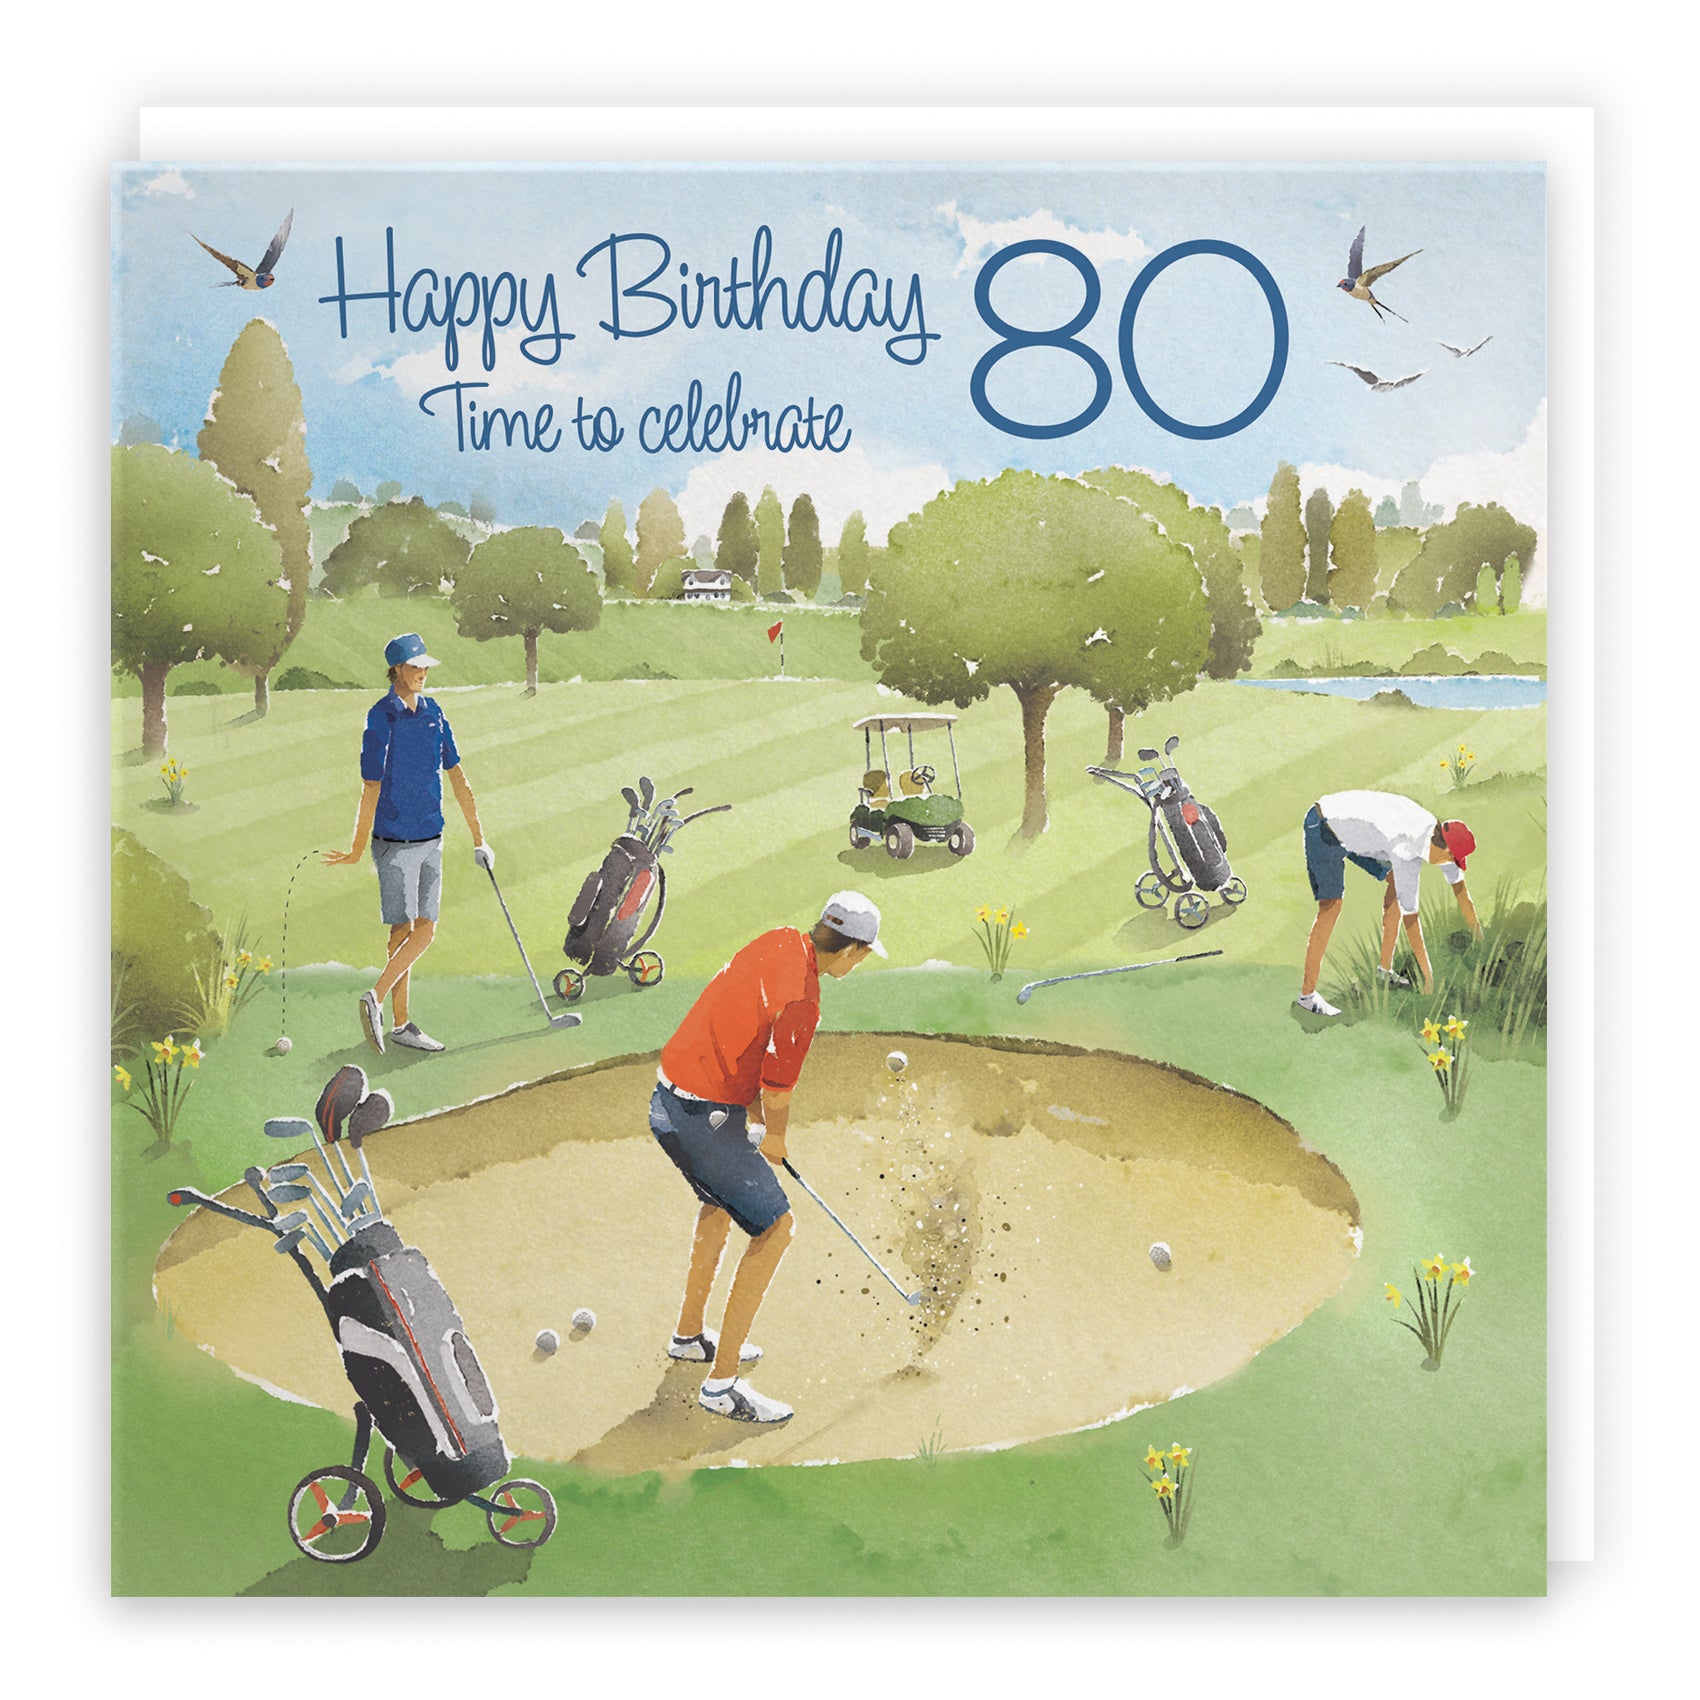 Golfing 80th Birthday Card Golf Bunker Milo's Gallery